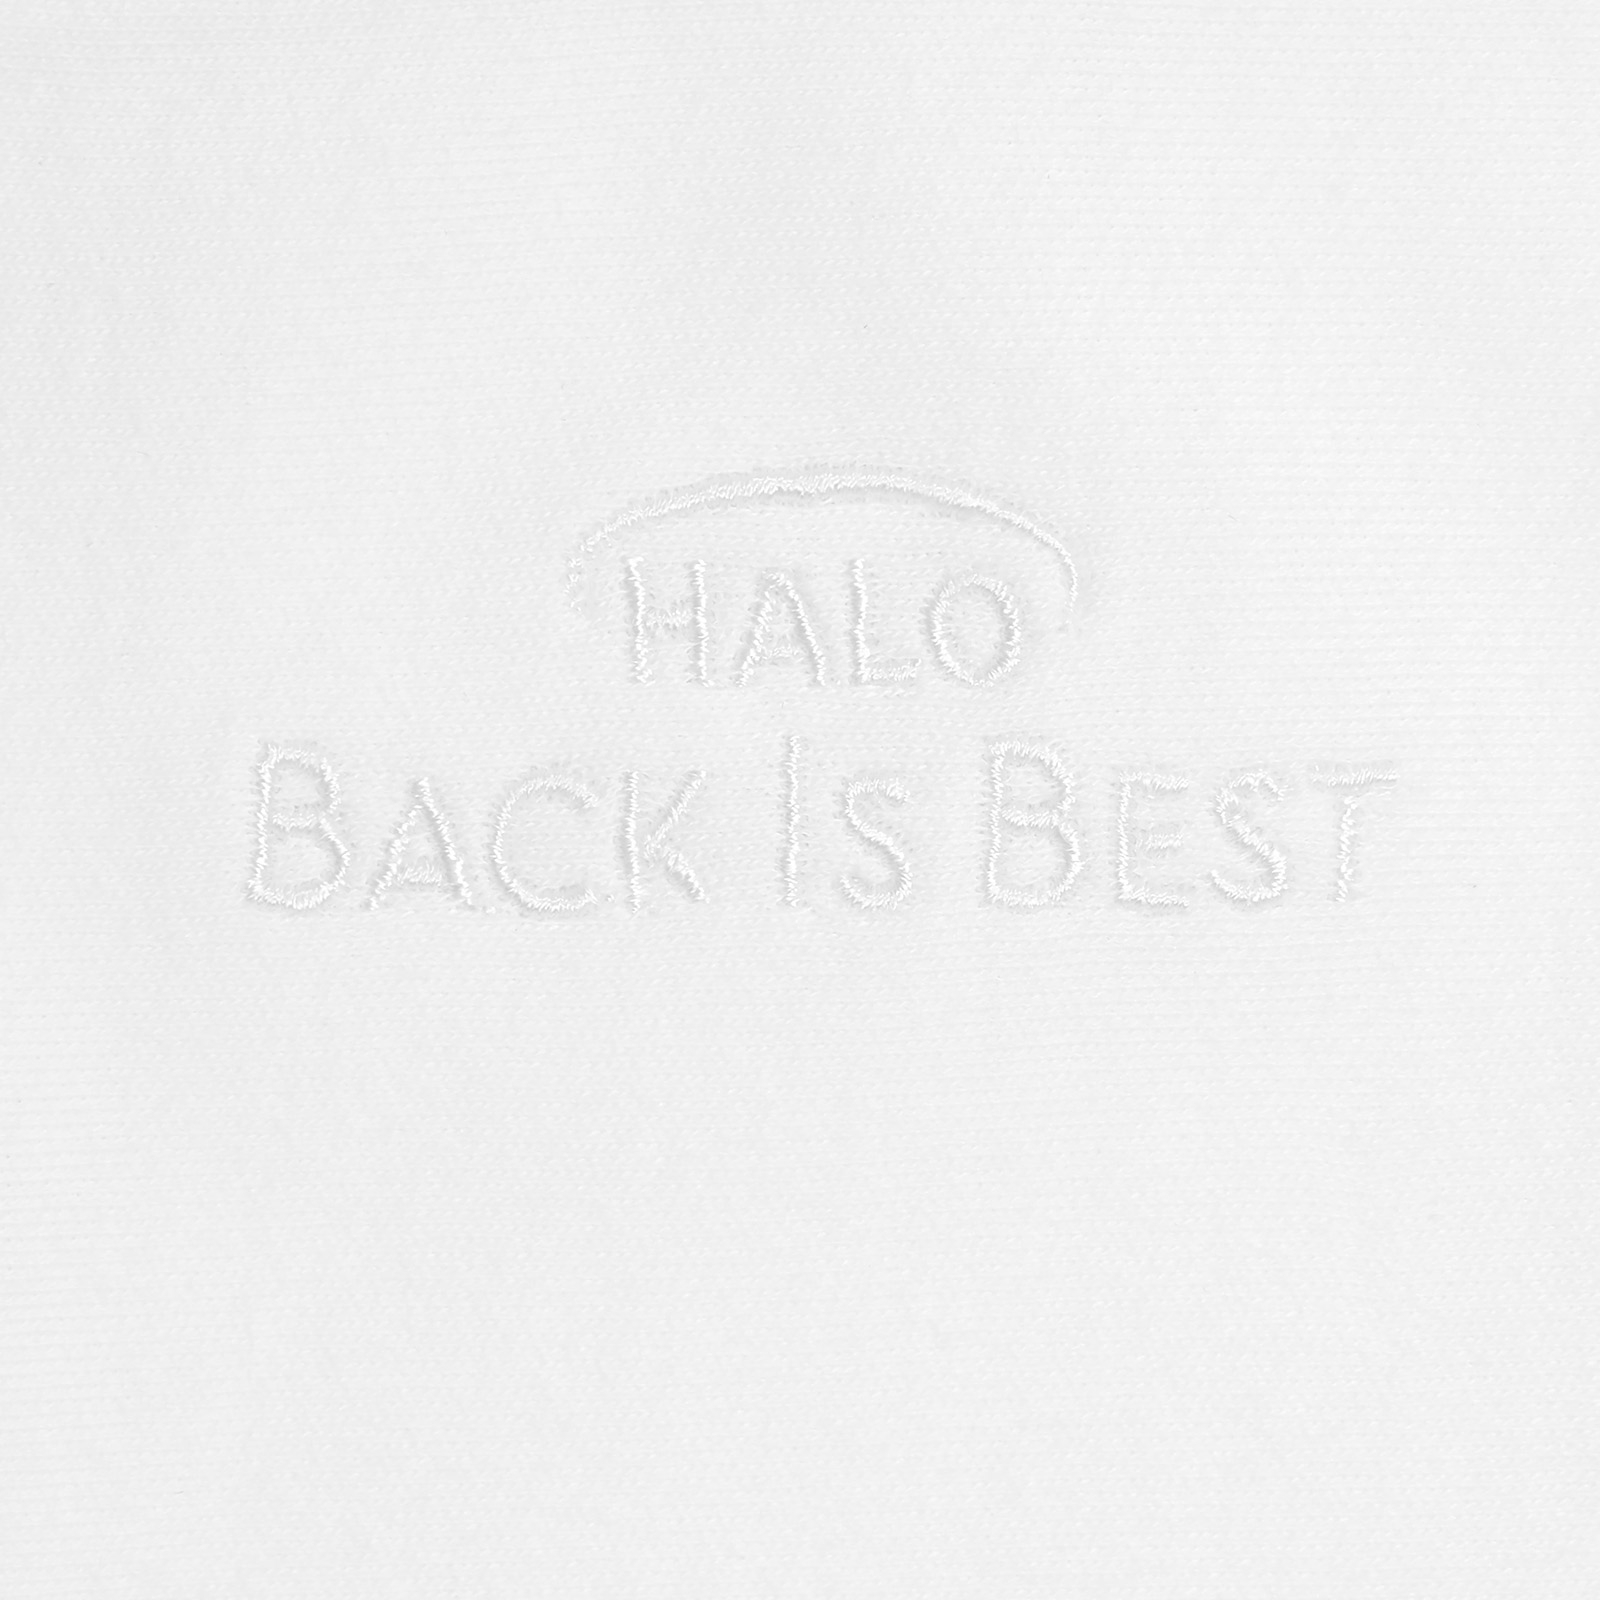 Couverture d'emmaillotage 3 en 1 SleepSack blanche TOG 1,5 (3-6 mois) (Halo) - Image 2